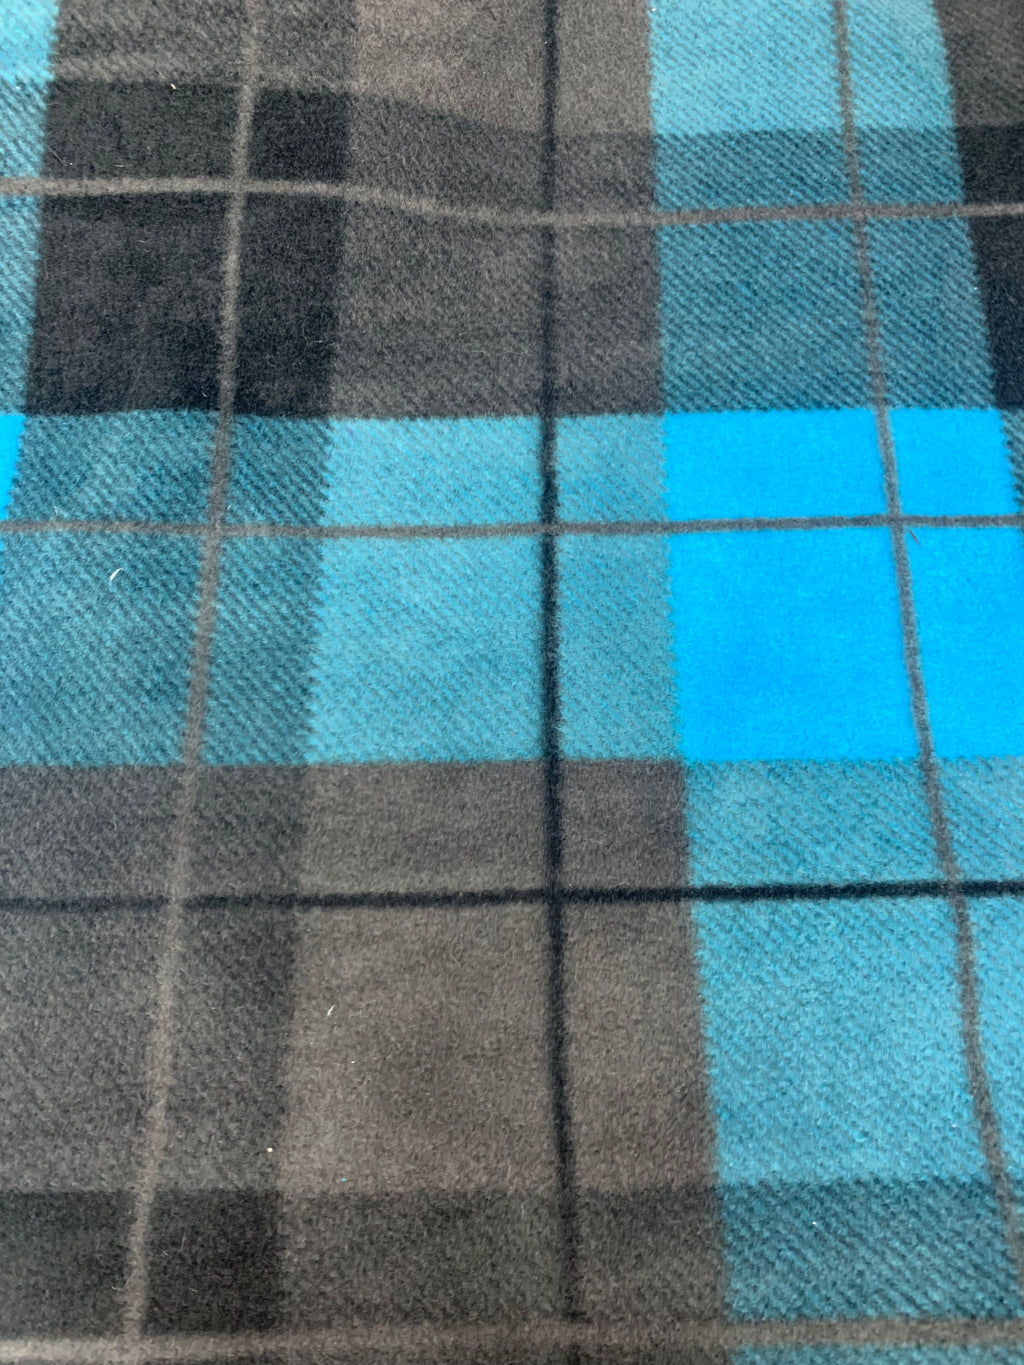 Blue, Black & Grey Plaid Adult Size Blanket